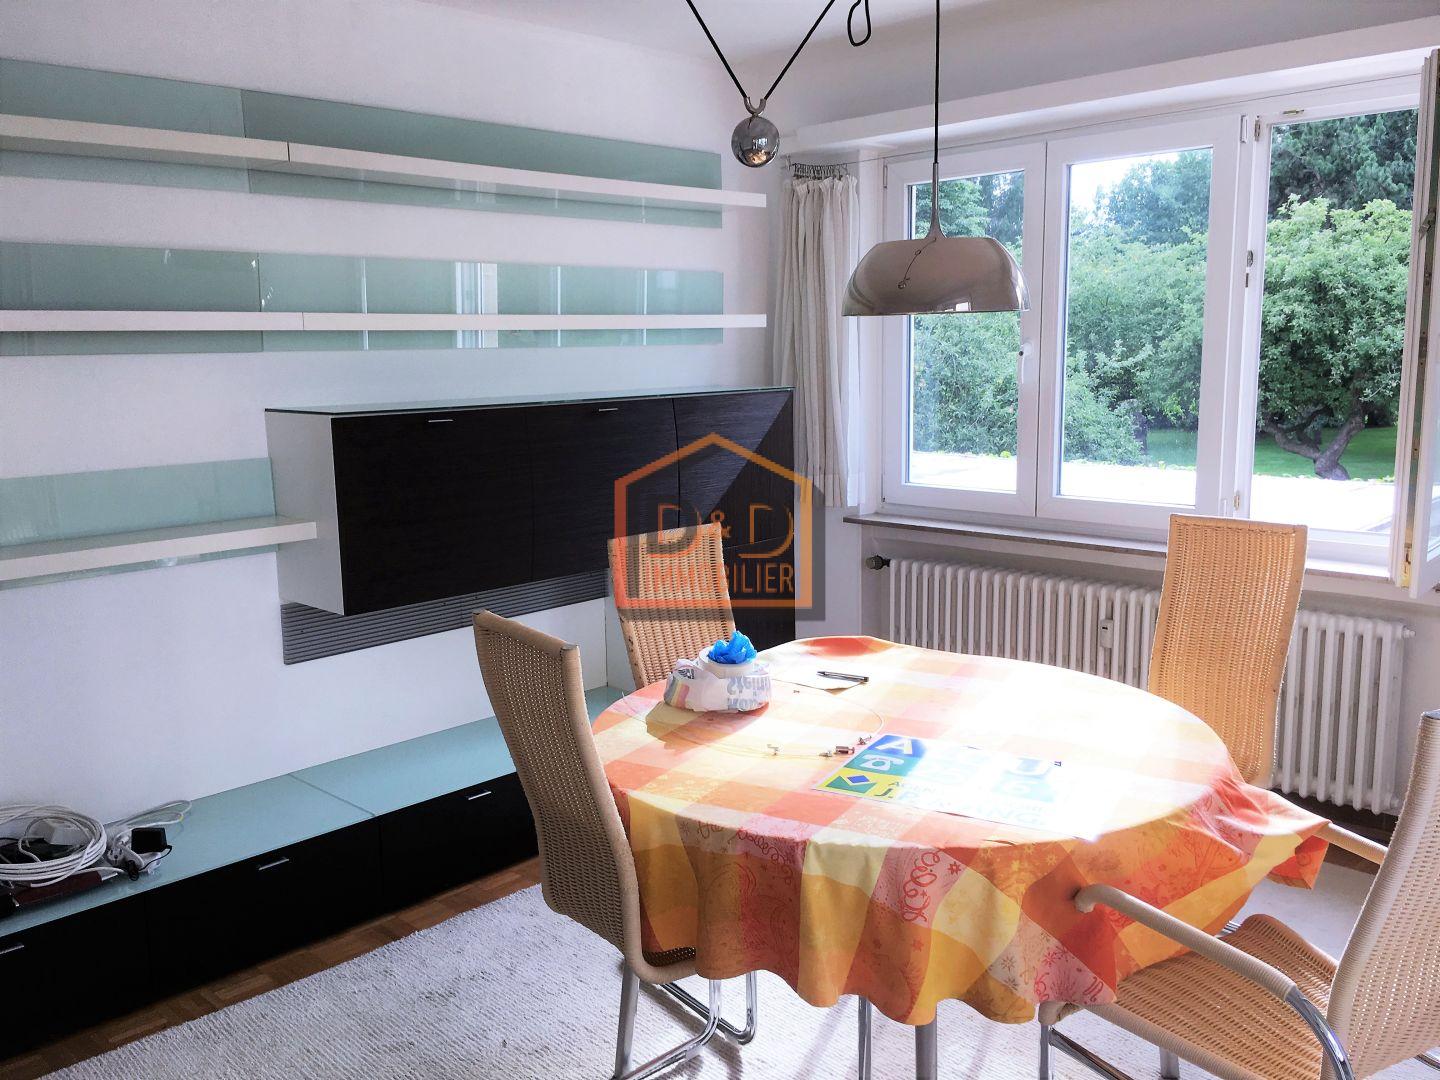 Appartement à Luxembourg-Merl, 60 m², 1 chambre, 1 salle de bain, 1 500 €/mois